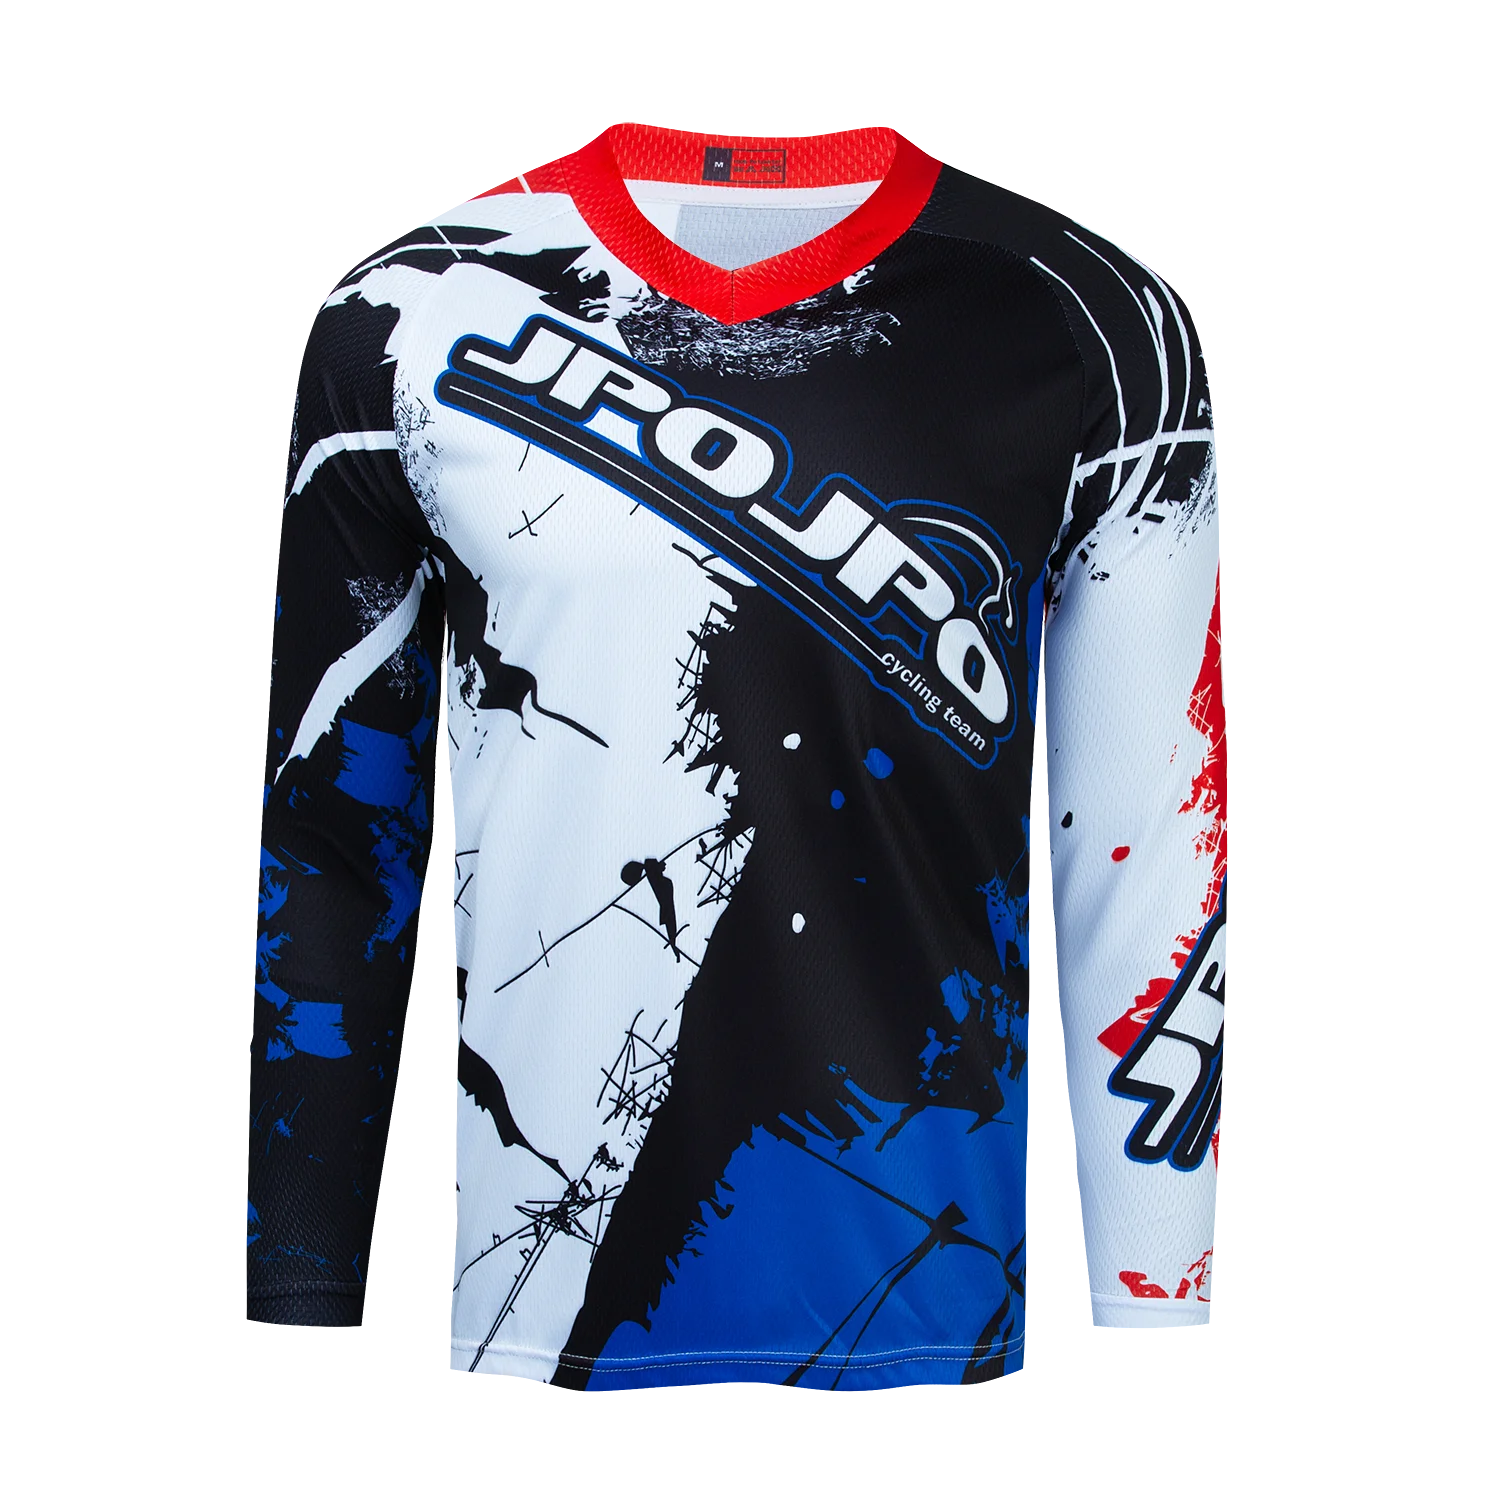 JPOJPO Downhill Cycling Jersey Men's Racing Jersey Long Sleeve MTB Bicycle Clothing Bike Shirt Motorcycle S-4XL 